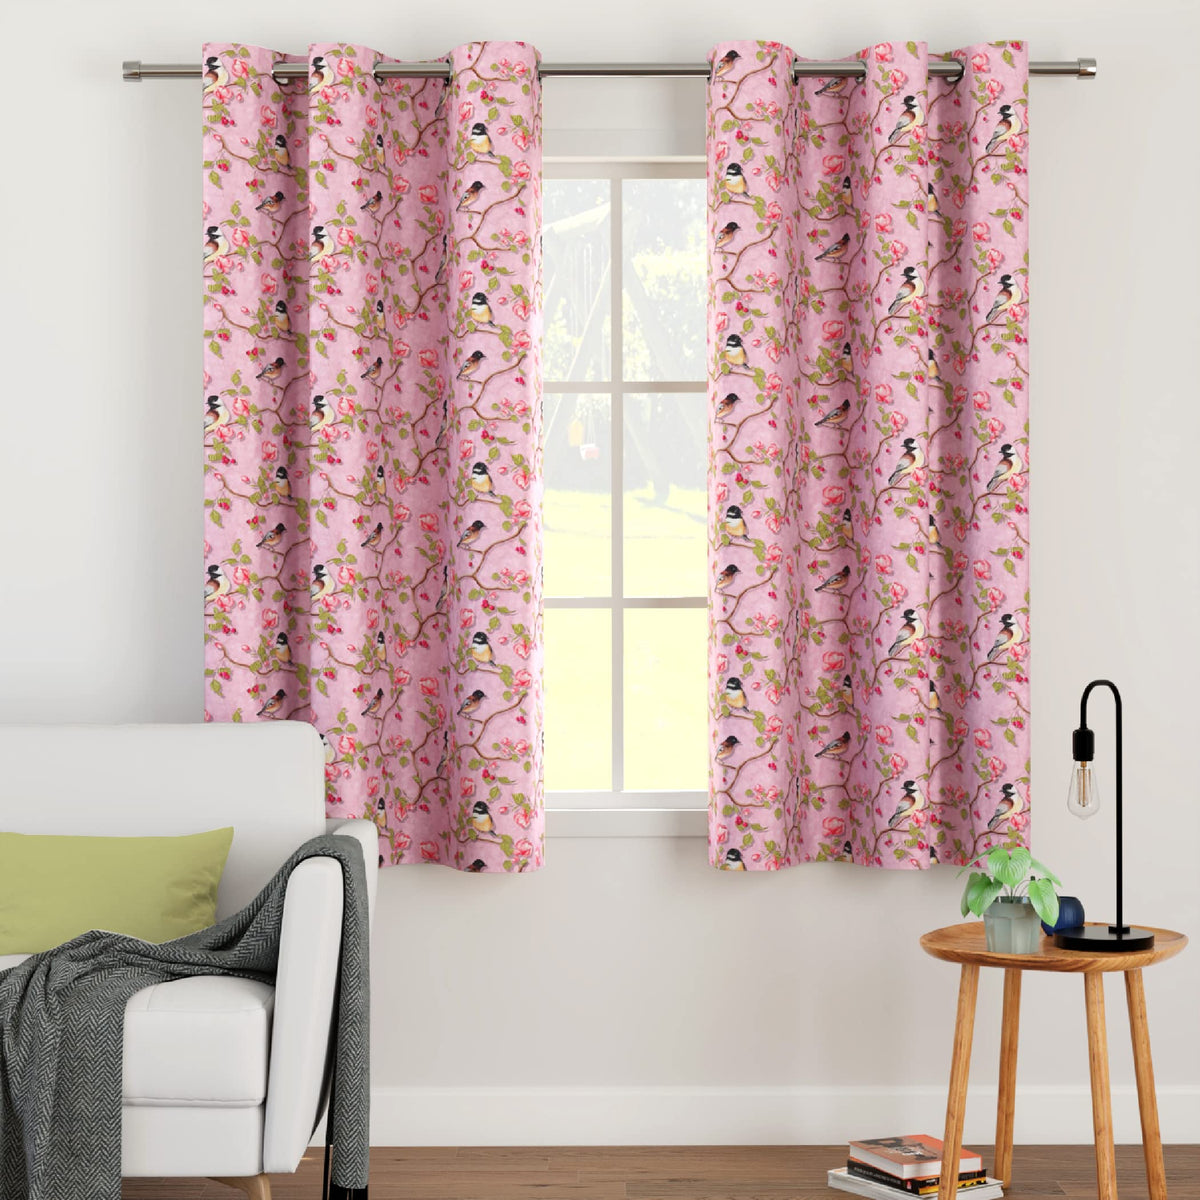 Encasa Homes Blackout Curtains (5 ft, 2 Panels) - Room Darkening - Floral Digital Print with Grommets, 85% Light Blocking, Sound & Heat Reducing - F1 Spring